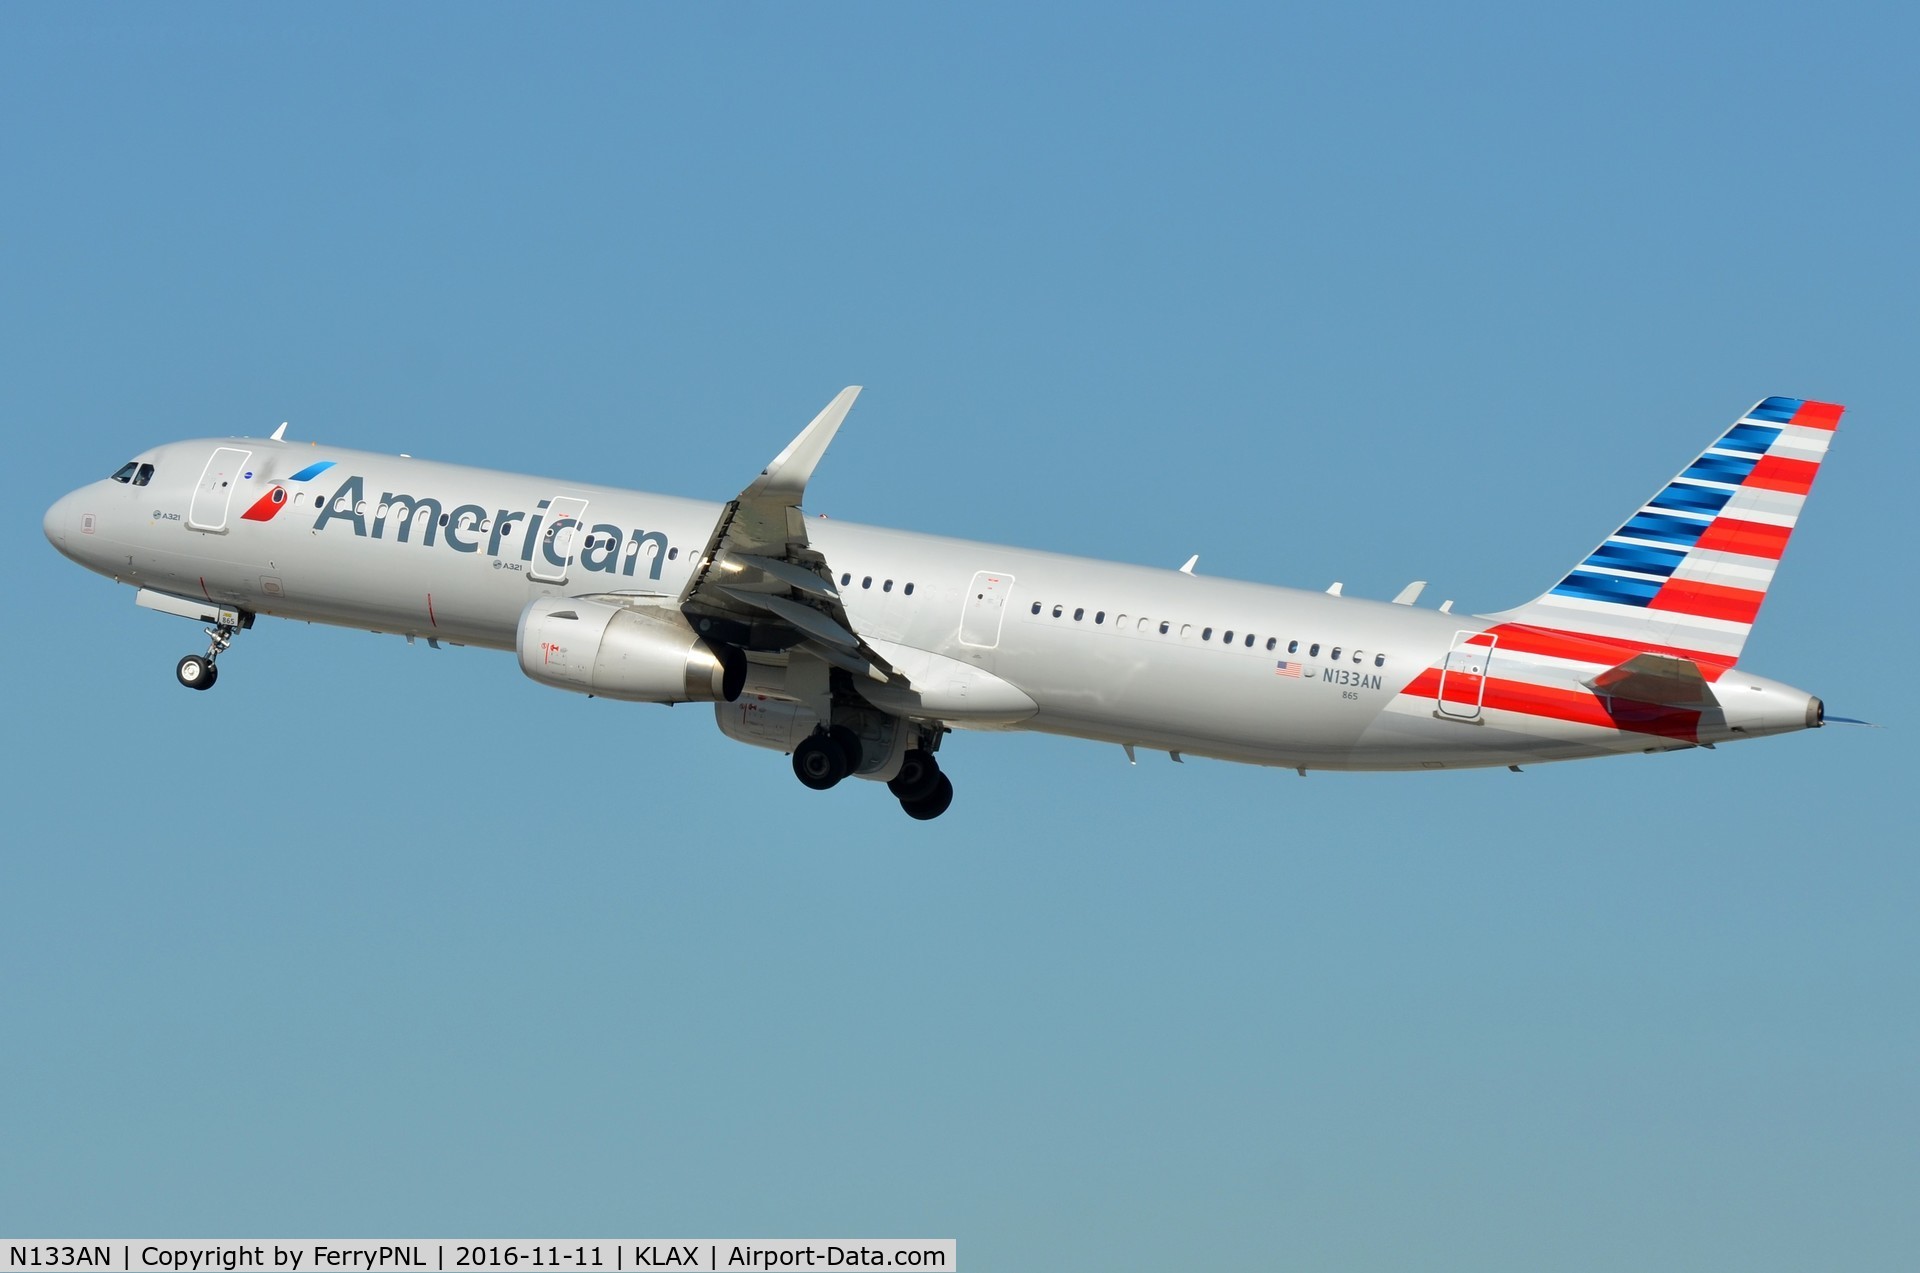 N133AN, 2015 Airbus A321-200 C/N 6482, Departure of American A321